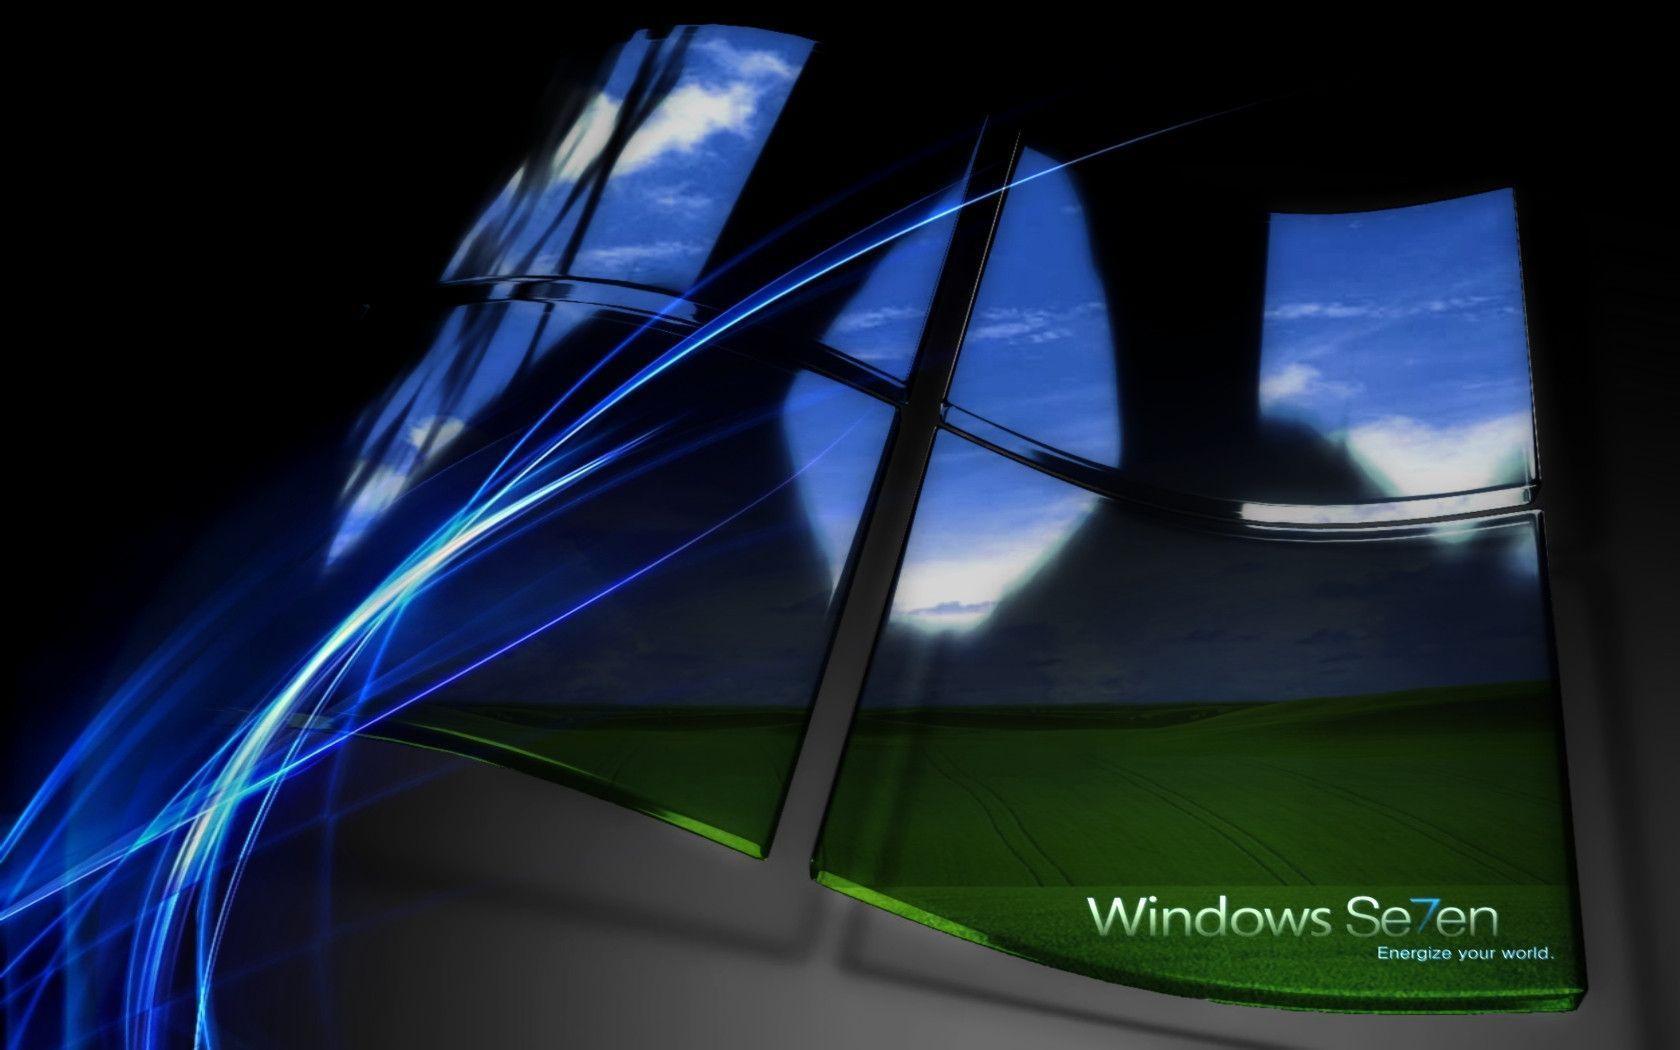 HD Wallpaper for Windows 7 Ultimate